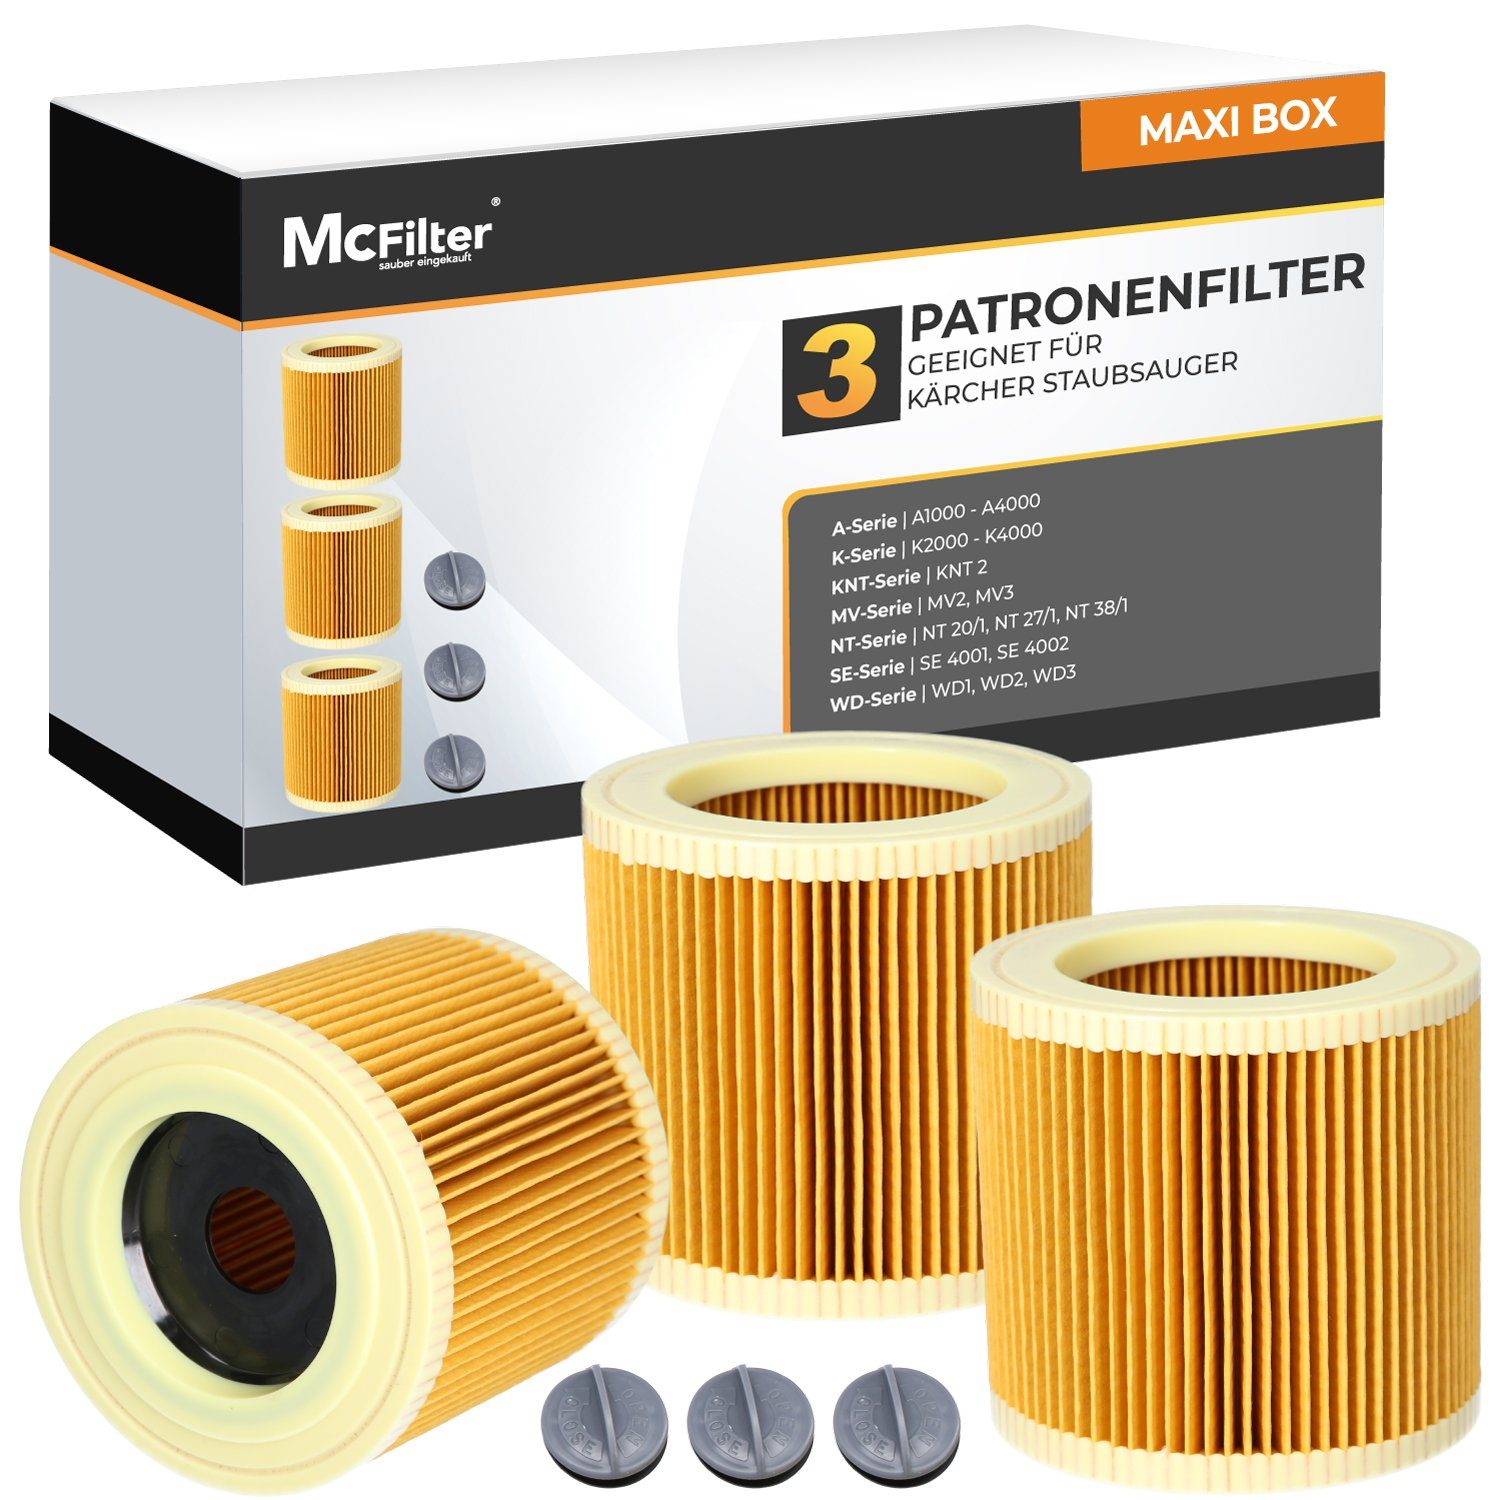 McFilter Patronenfilter (3 Filter) Lamellenfilter geeignet, für Kärcher Nass -Trockensauger MV 2 WD 2 A 2003 A 2004 WD 2.200 WD 2.210 WD 2.240 WD 2.250  und weitere Modelle, wie Kärcher Filter 6.414-552.0, 6.414-772.0,  6.414-547.0, (3-St., Filter +